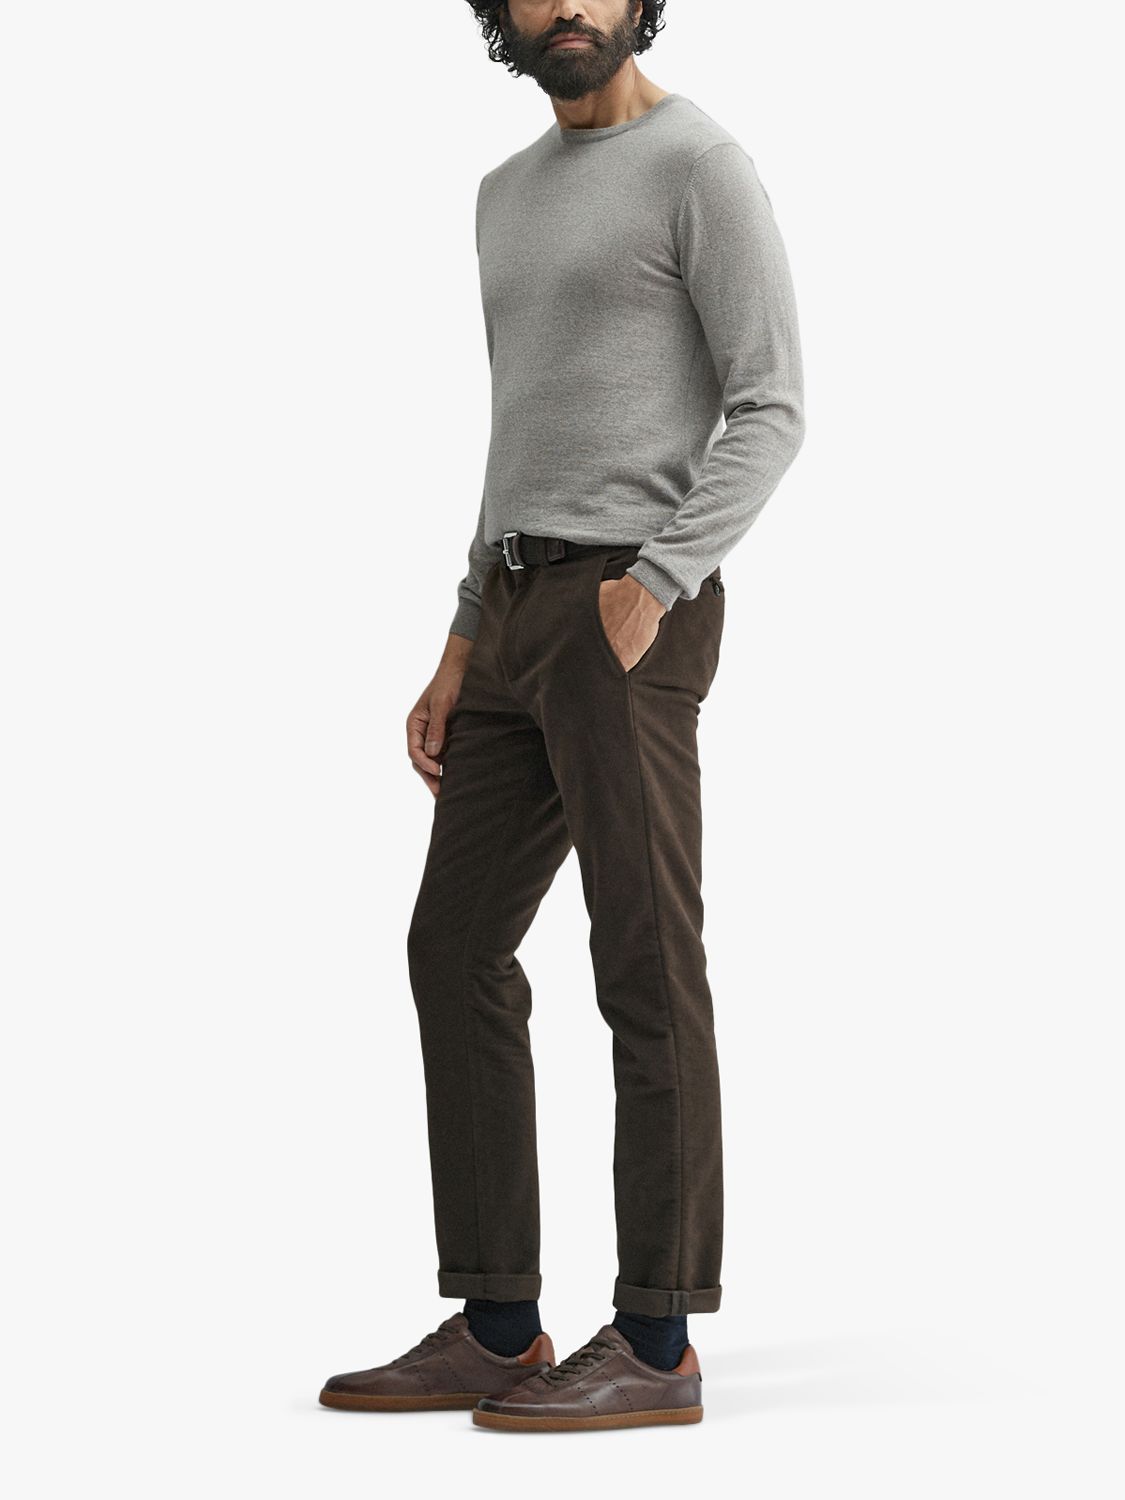 Buy Oliver Sweeney Moleskin Trousers, Brown Online at johnlewis.com